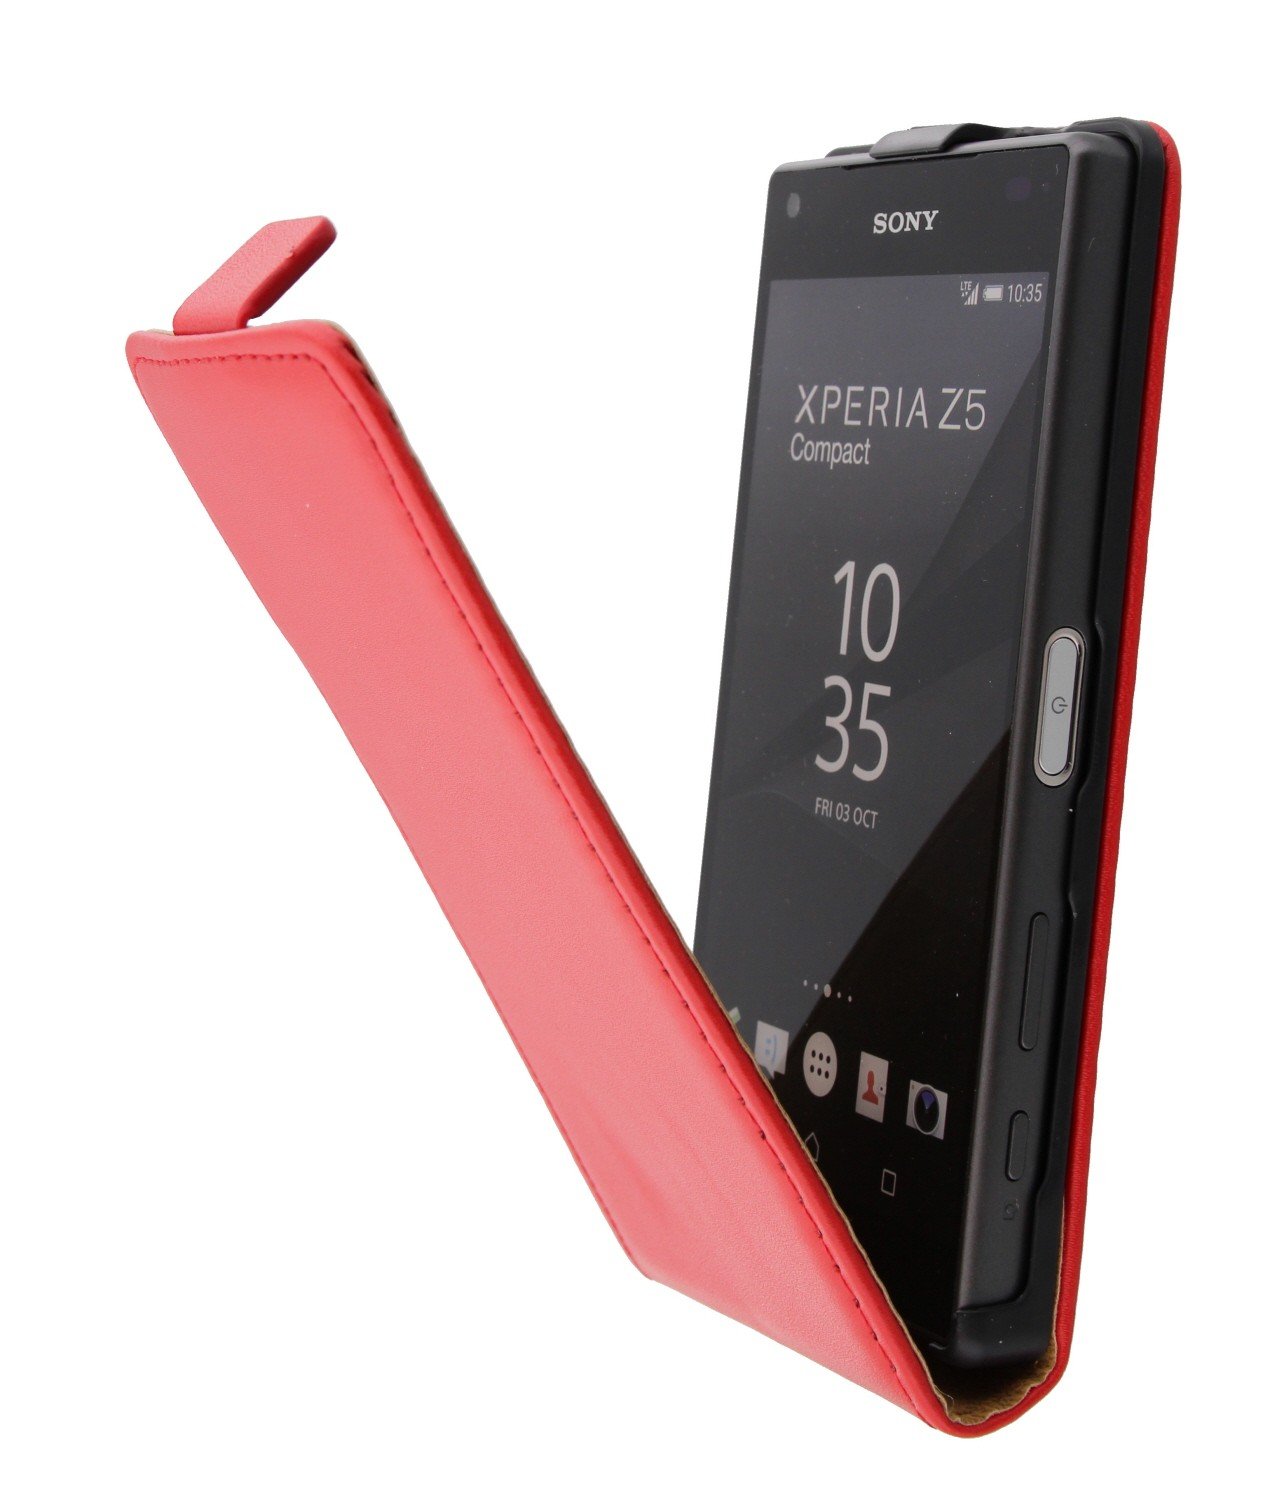 Permanent doden voetstuk Hoesje Sony Xperia Z5 Compact flip case dual color rood kopen? |  MobileSupplies.nl